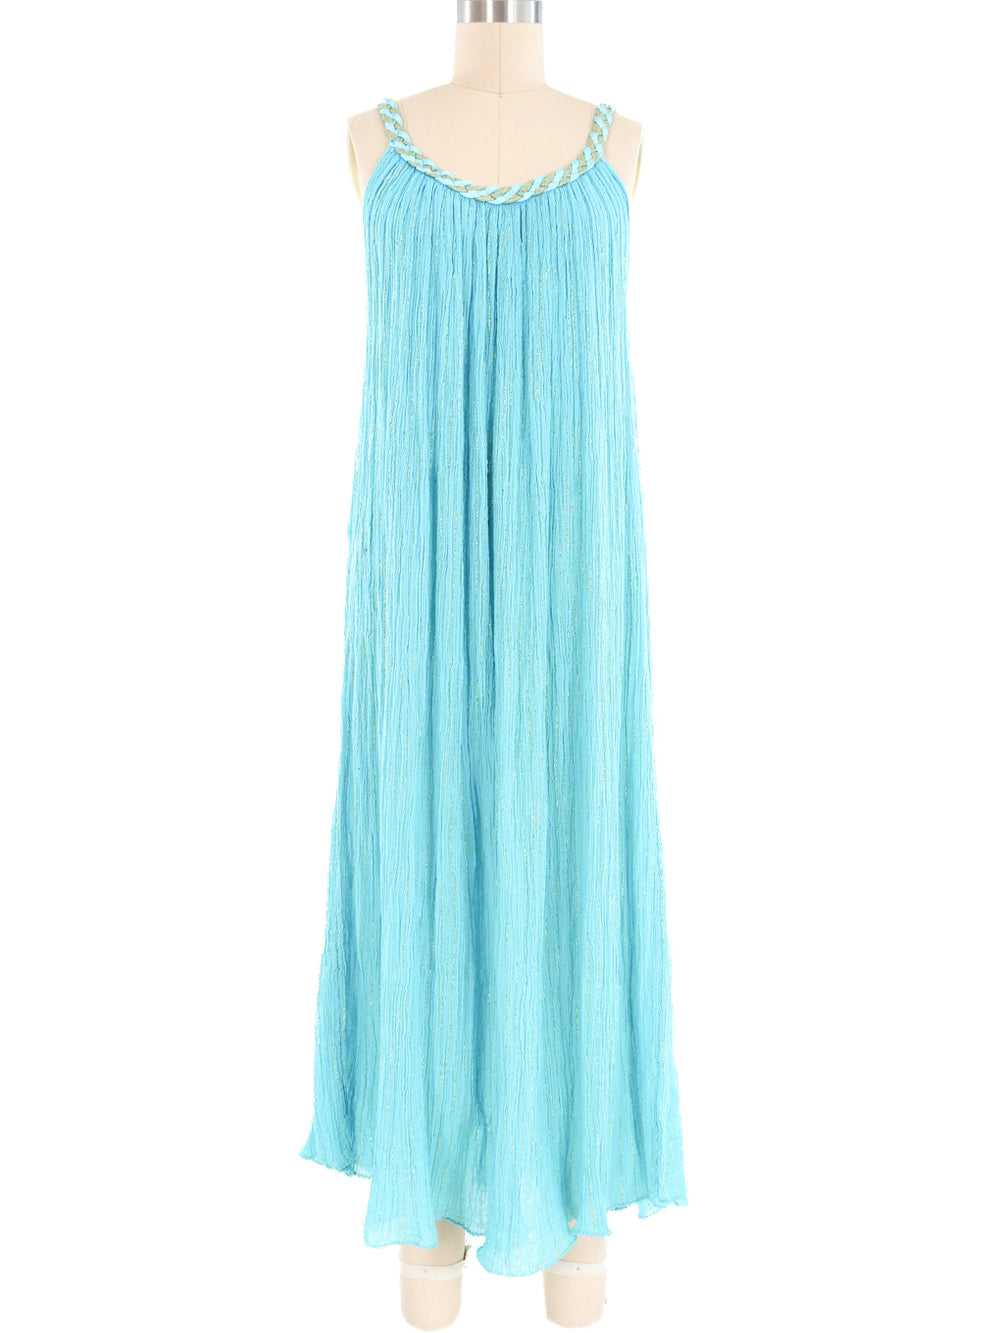 Turquoise Grecian Gauze Midi Dress - image 1